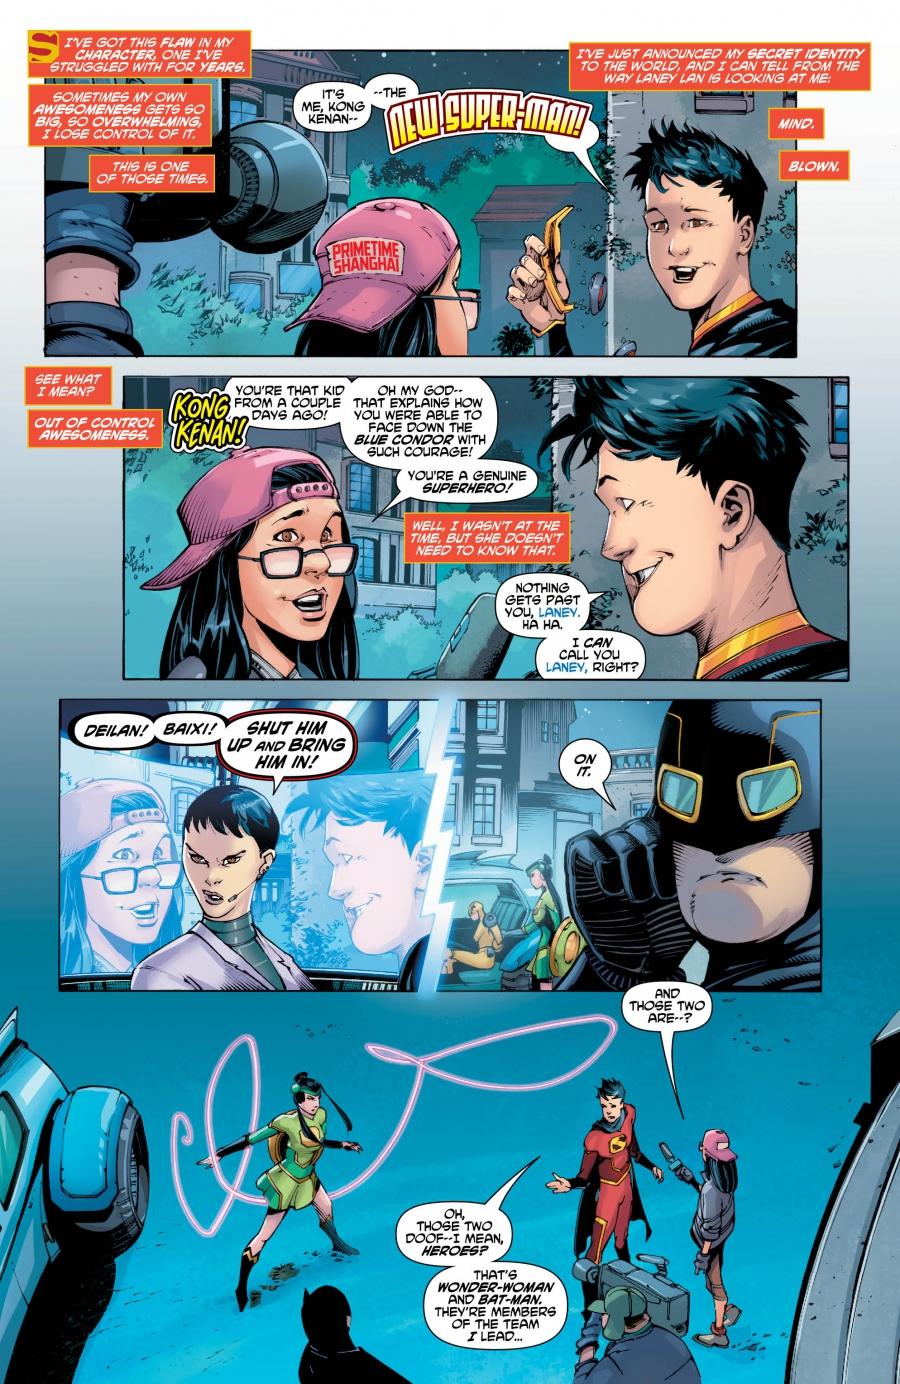 Panel from the New Super-Man written by Gene Luen Yang.